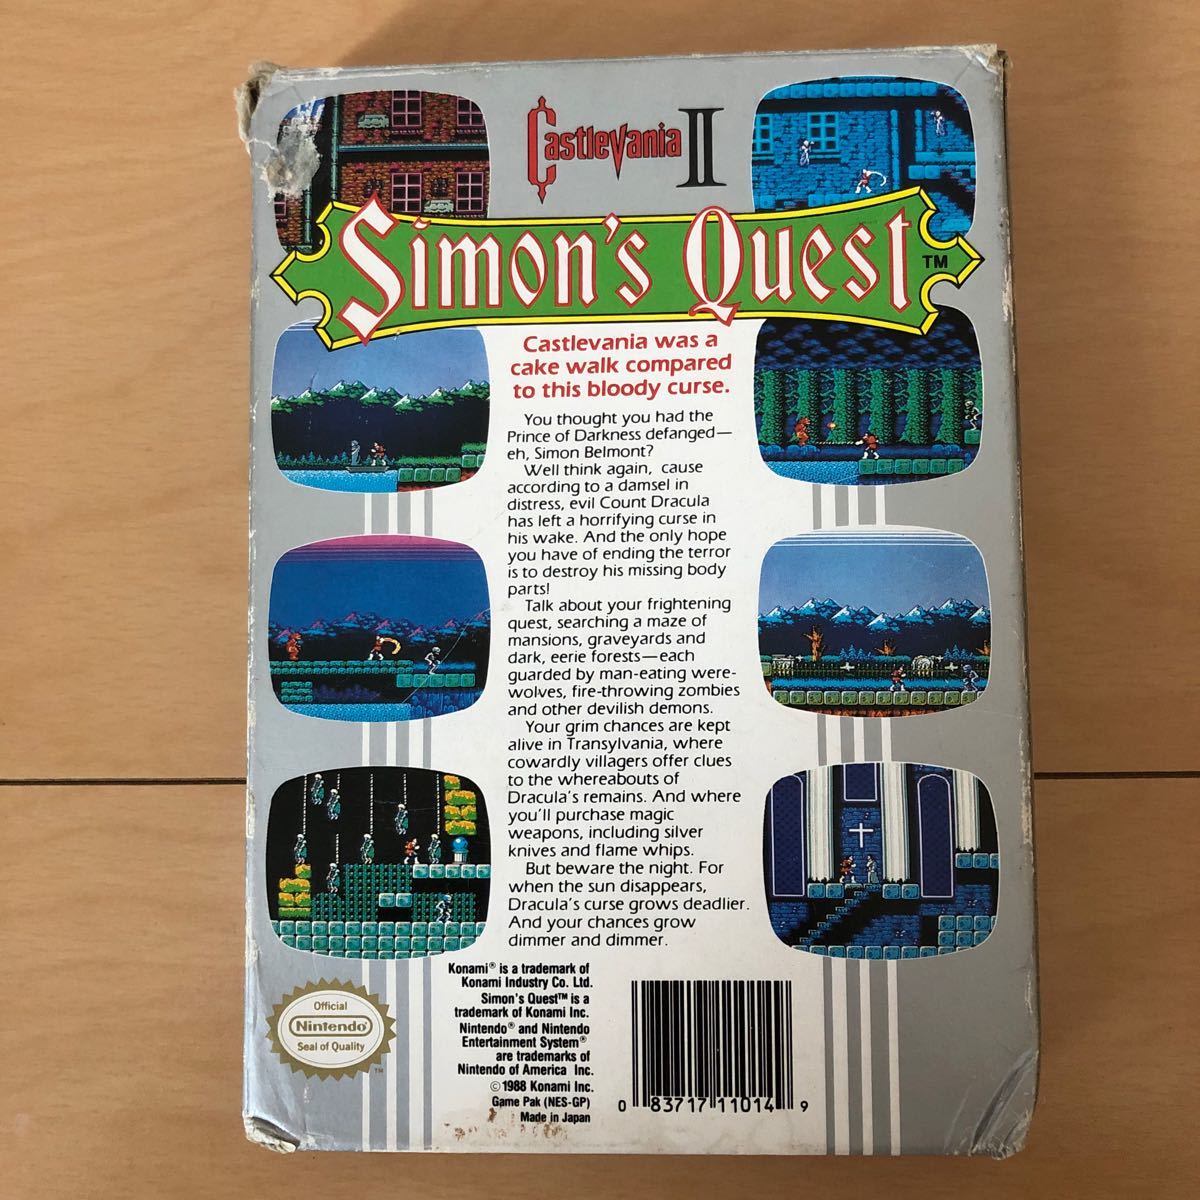 NES版 悪魔城ドラキュラ II 2 箱 説明書付き simon's quest ファミコンソフト 海外版 北米版